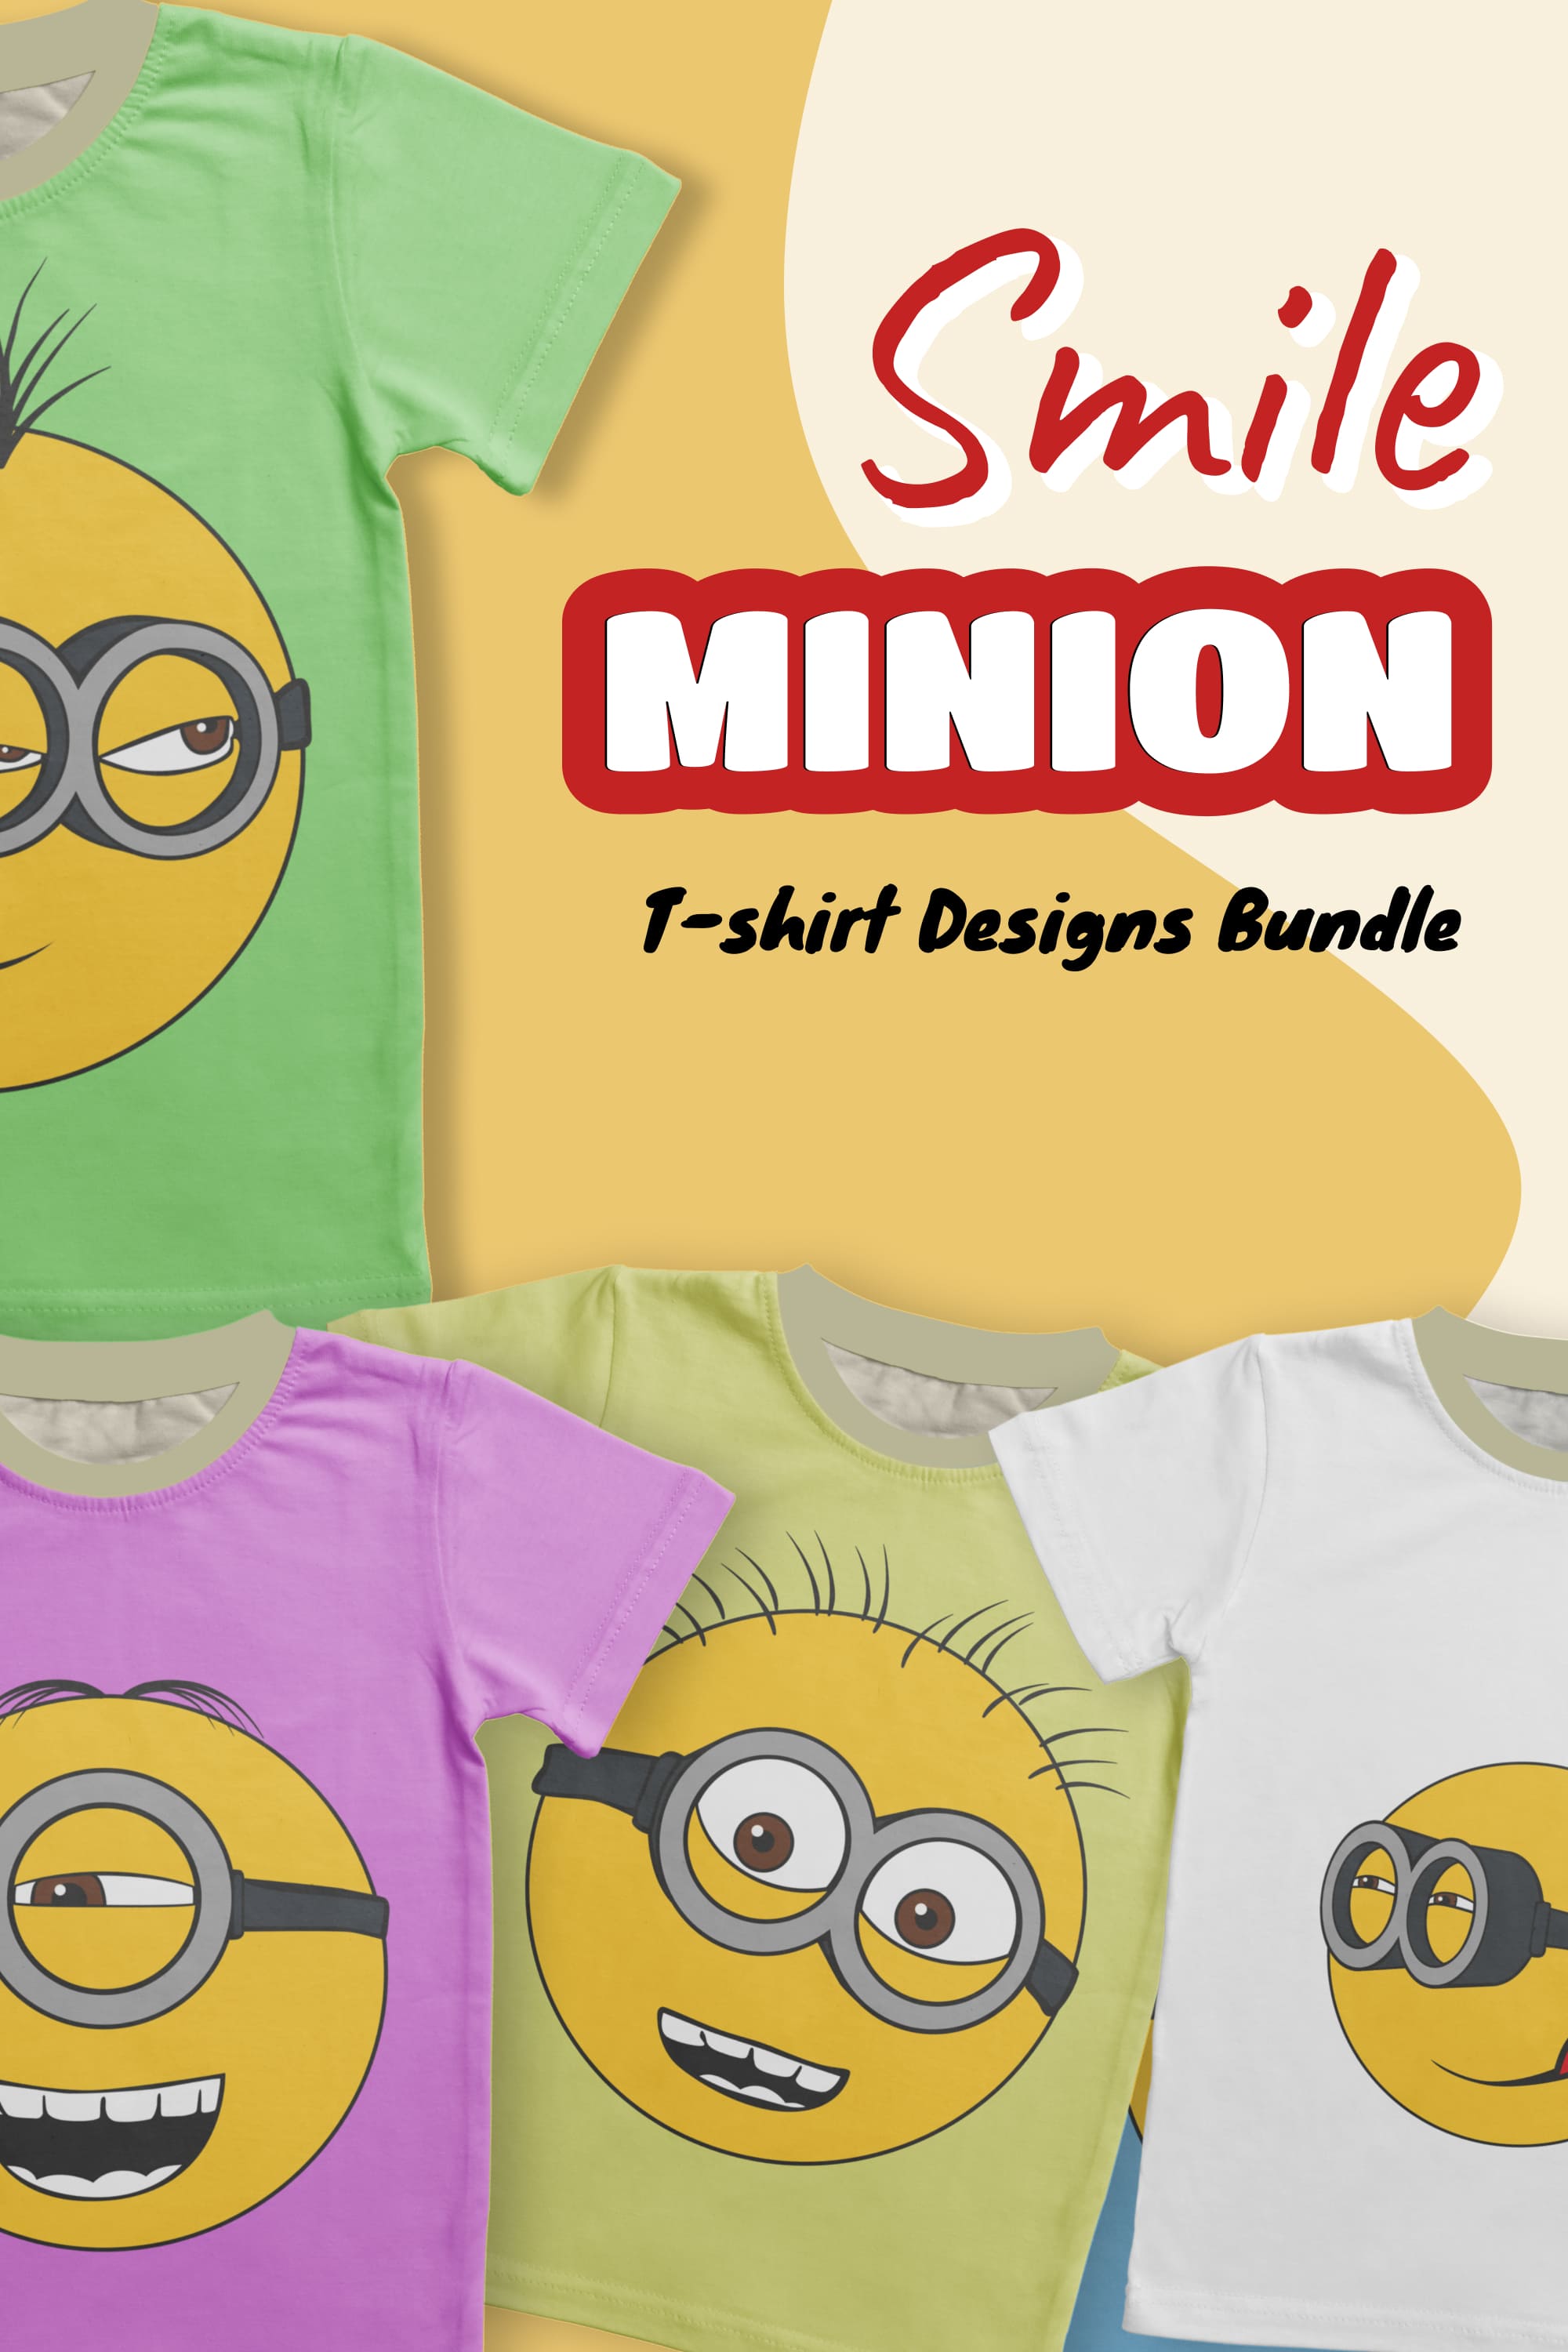 Minion Smile T-shirt Designs - Pinterest.